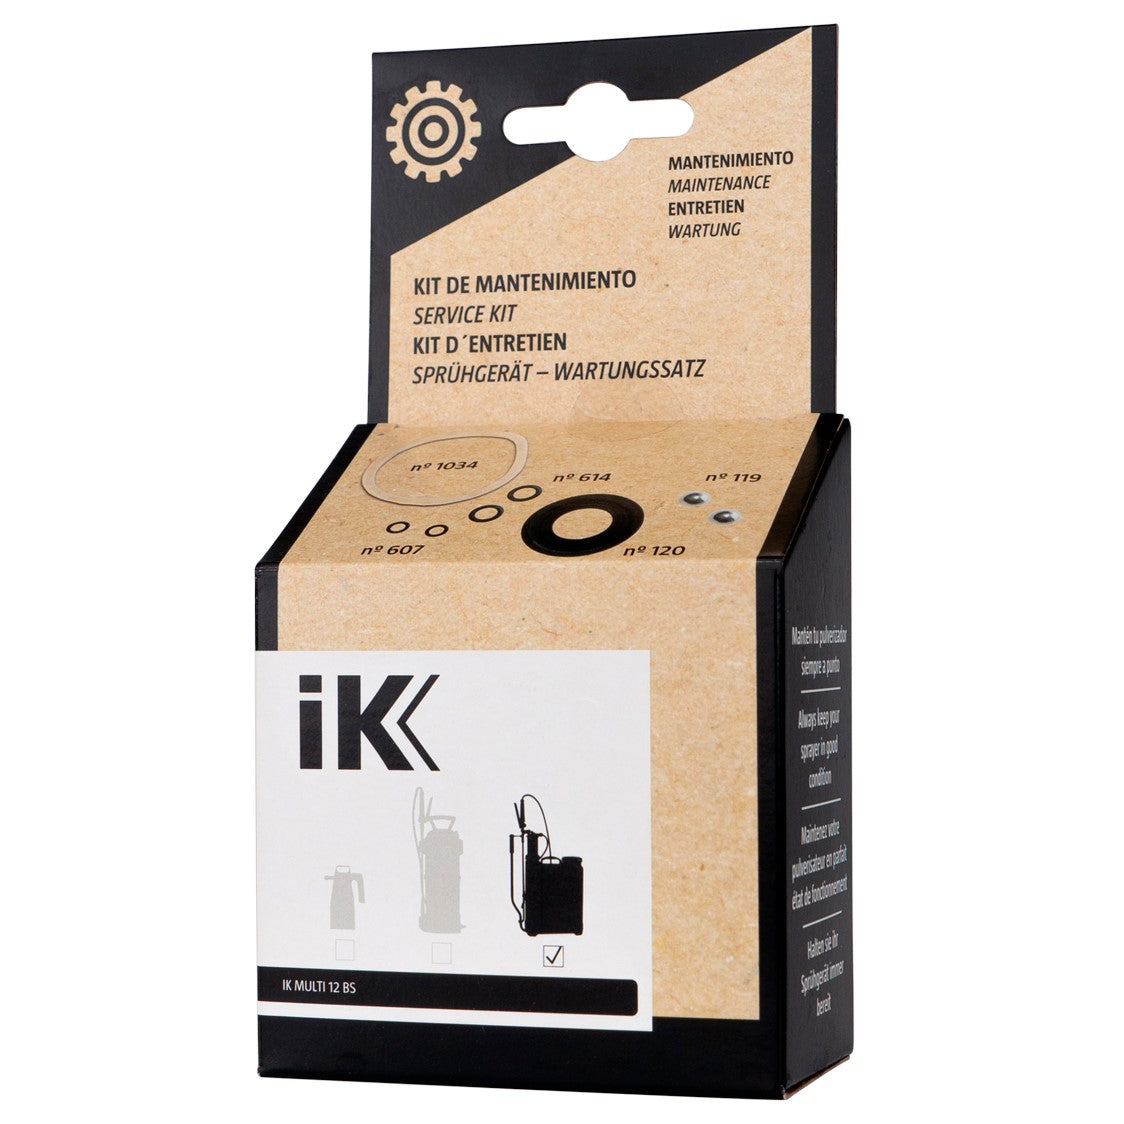 IK Sprayers Kit Manutenzione IK Multi 12 BS